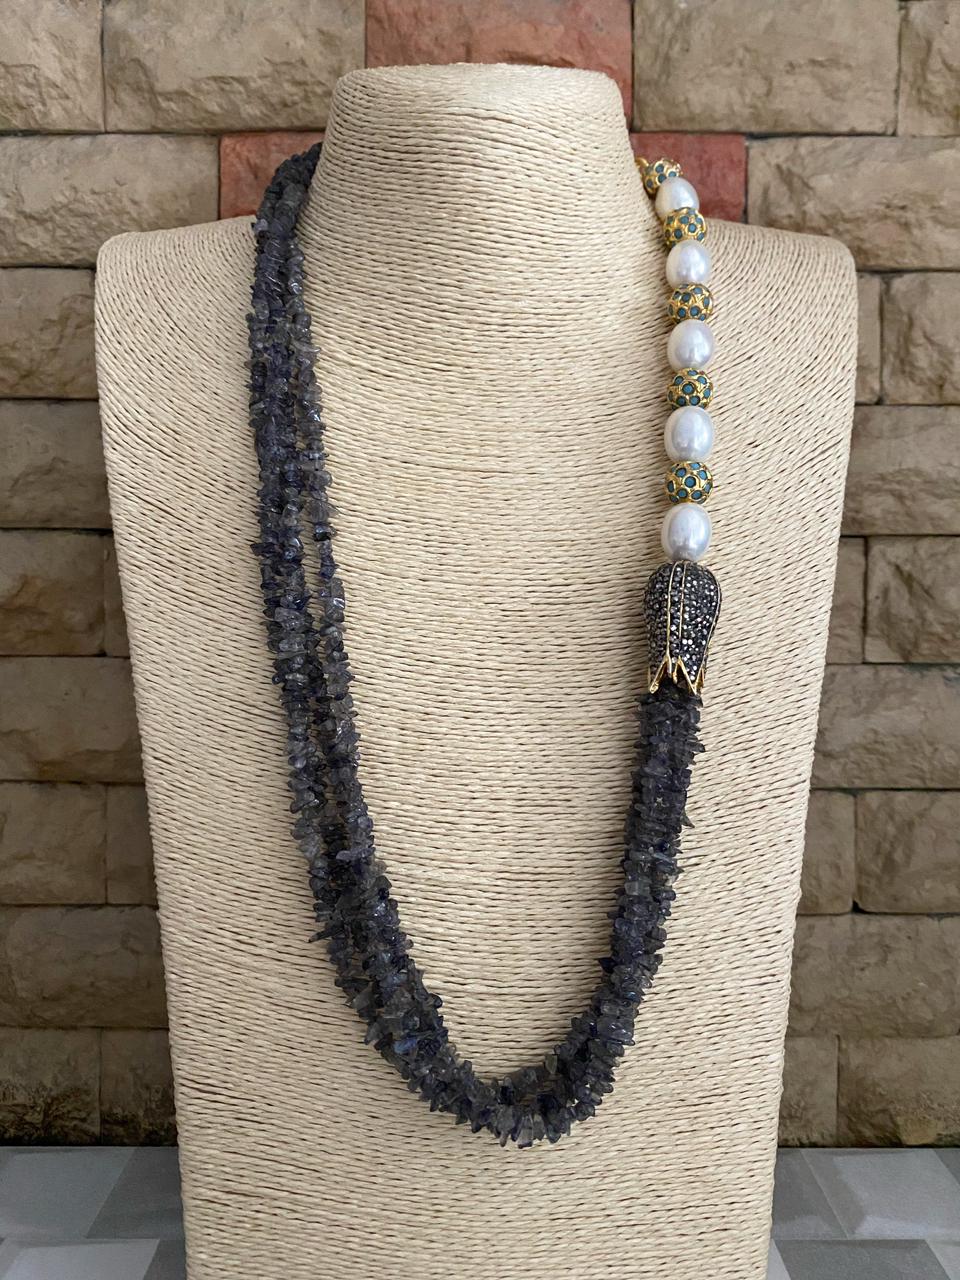 Buy Latest Beads Jewellery Designs Online For Women